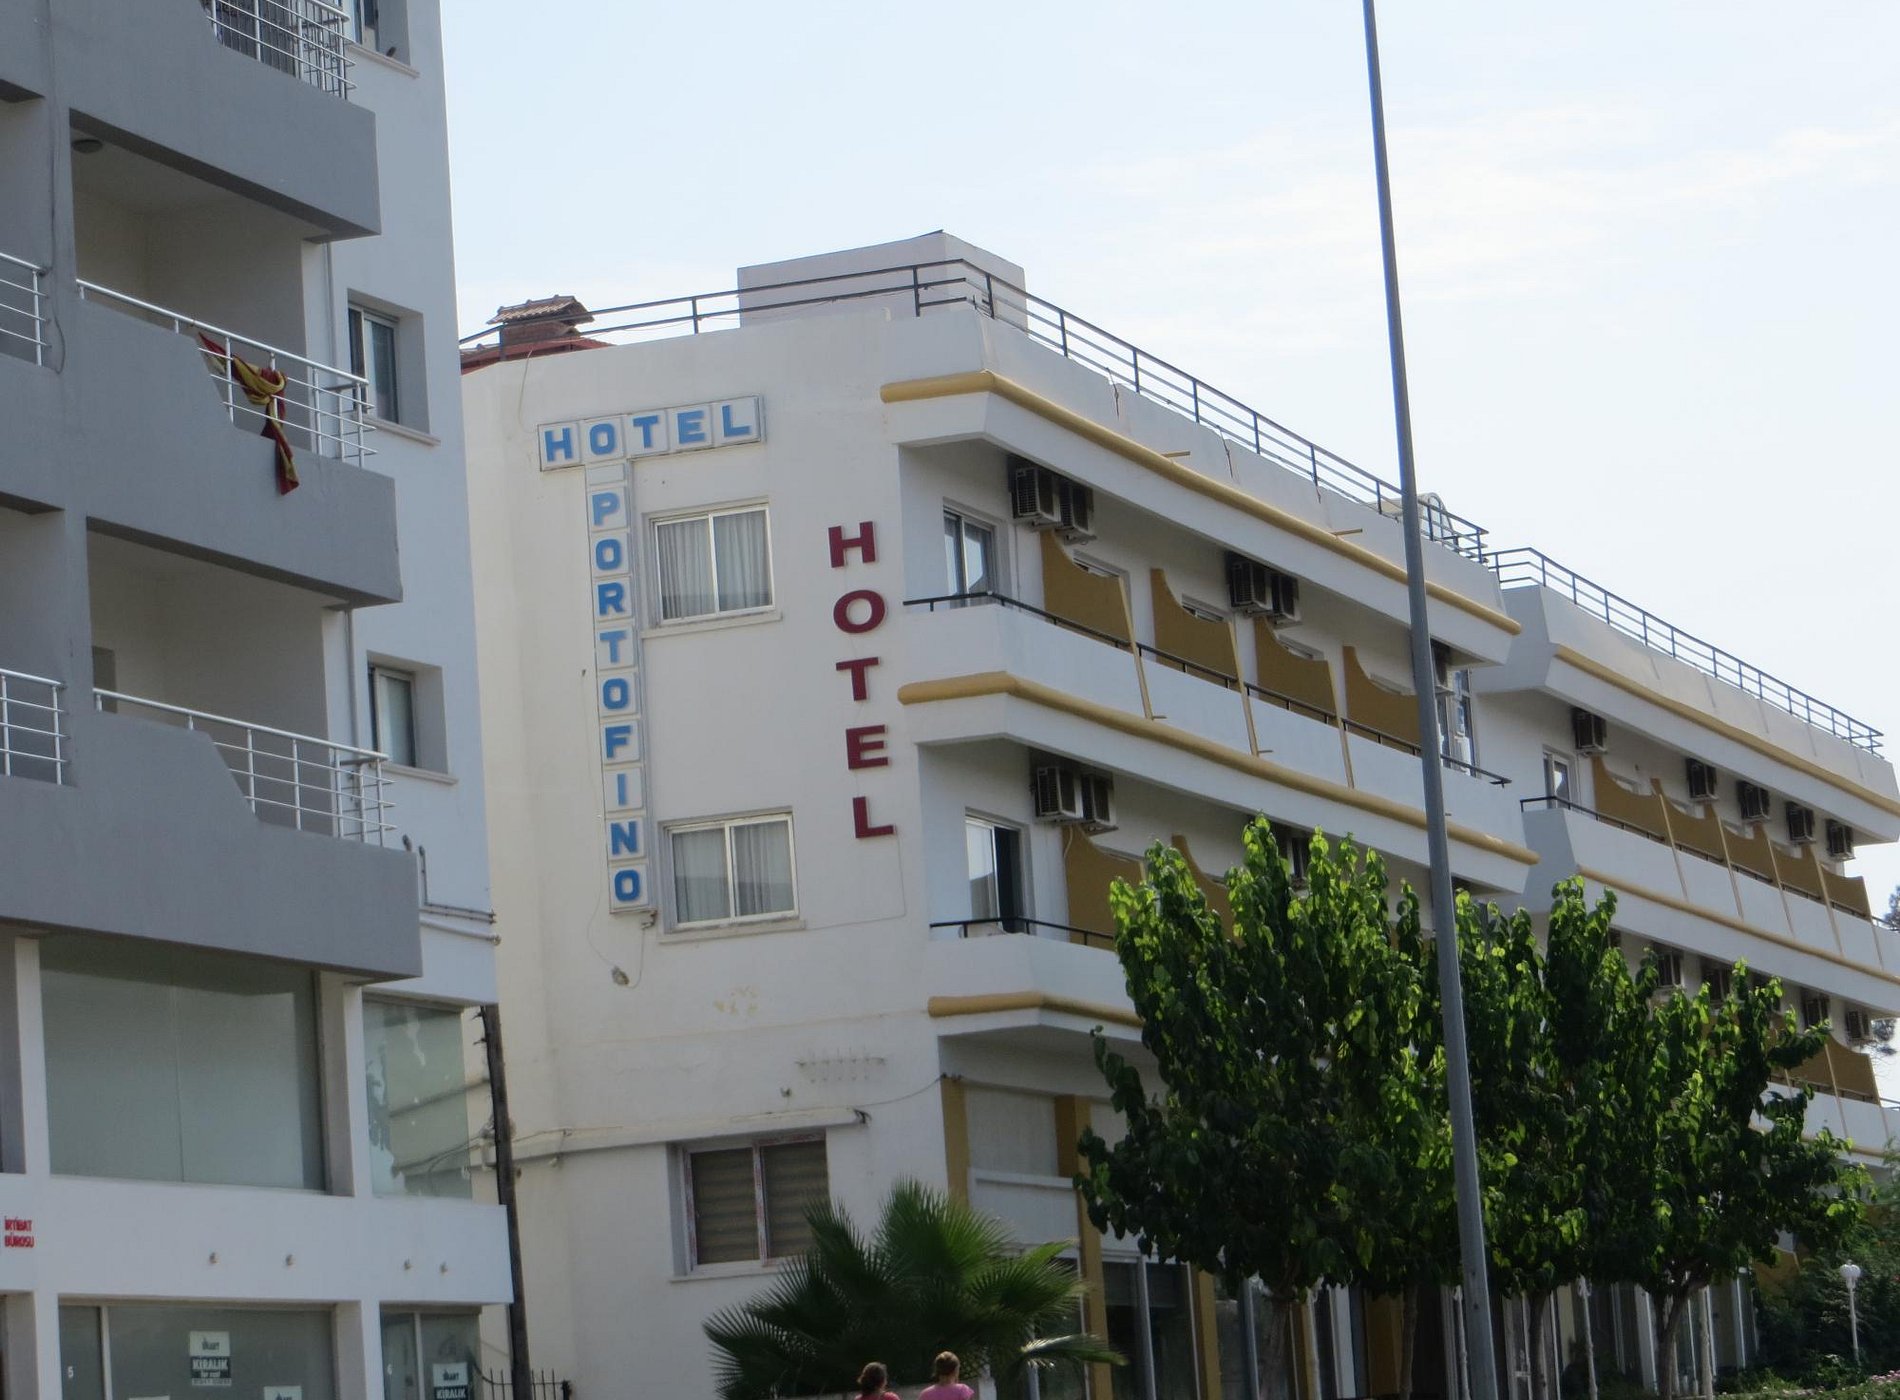 Portofino Hotel image